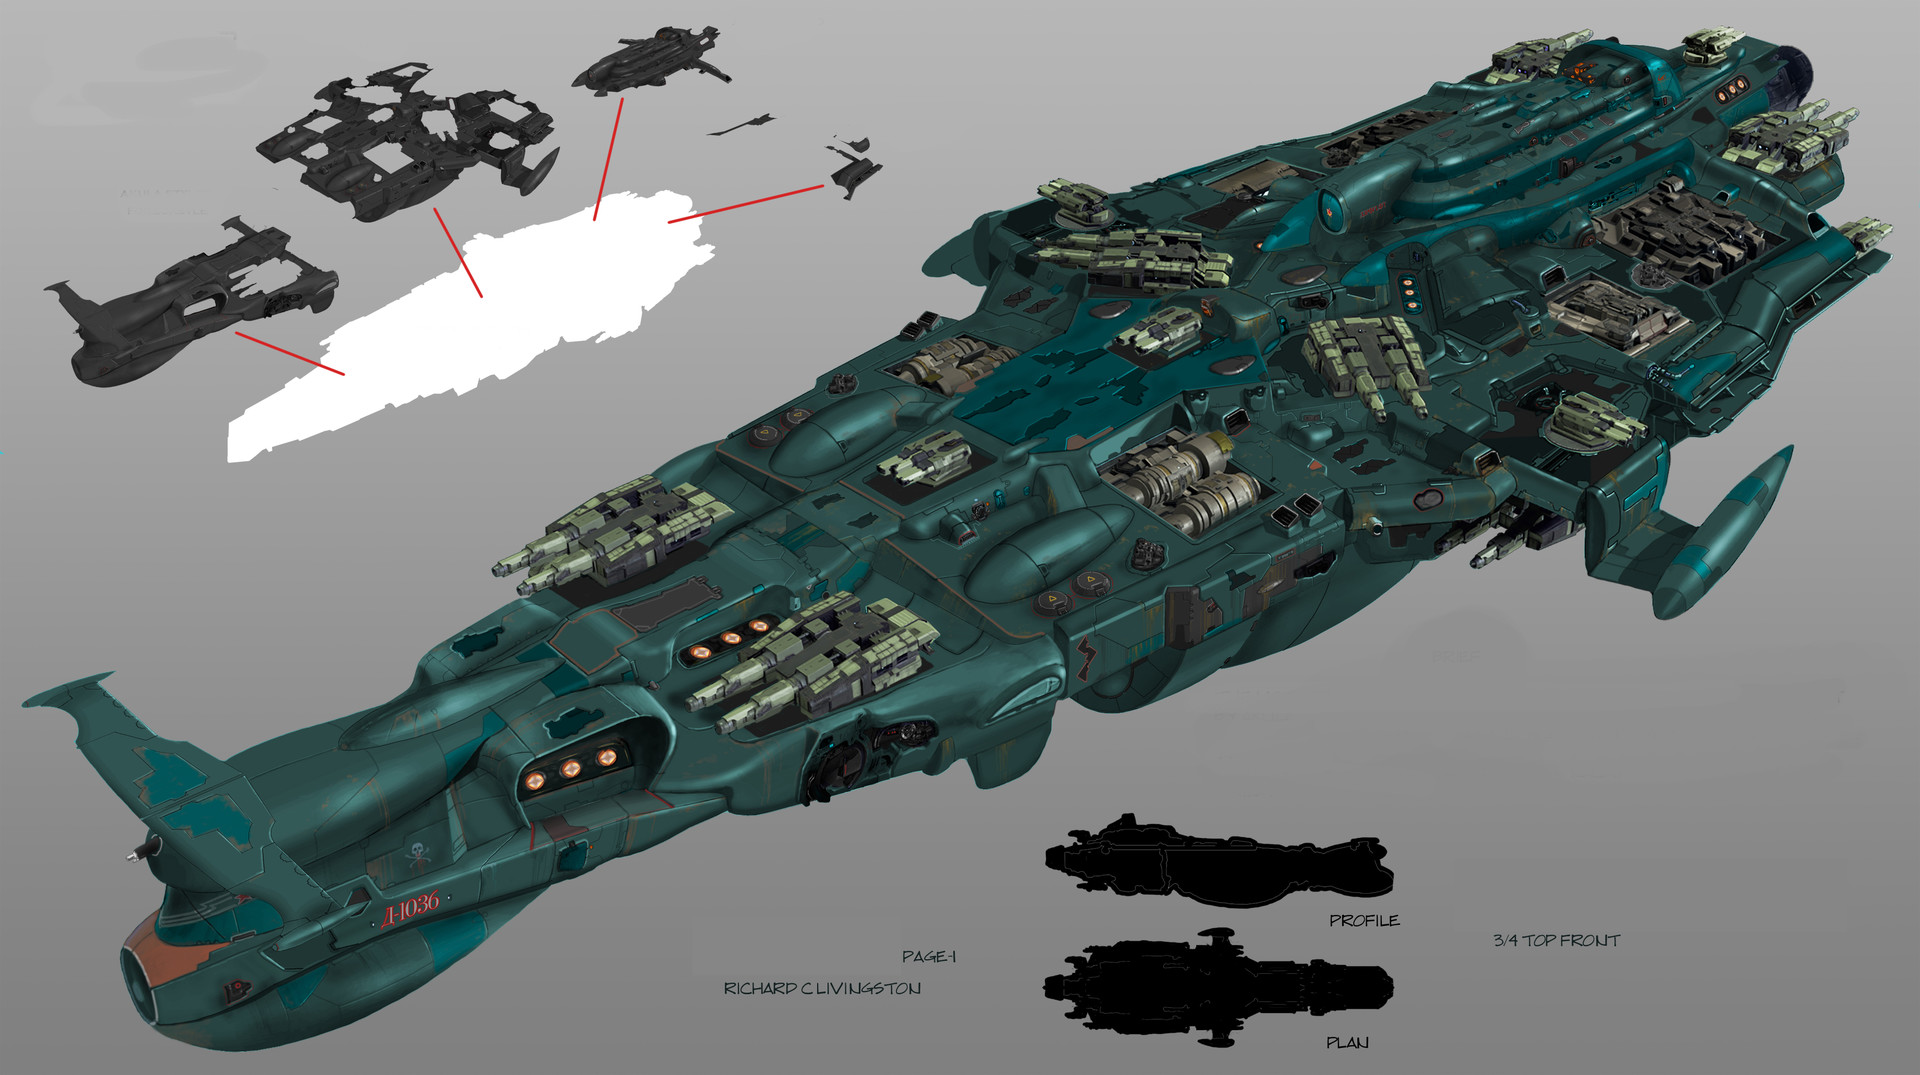 ArtStation - large space battleship